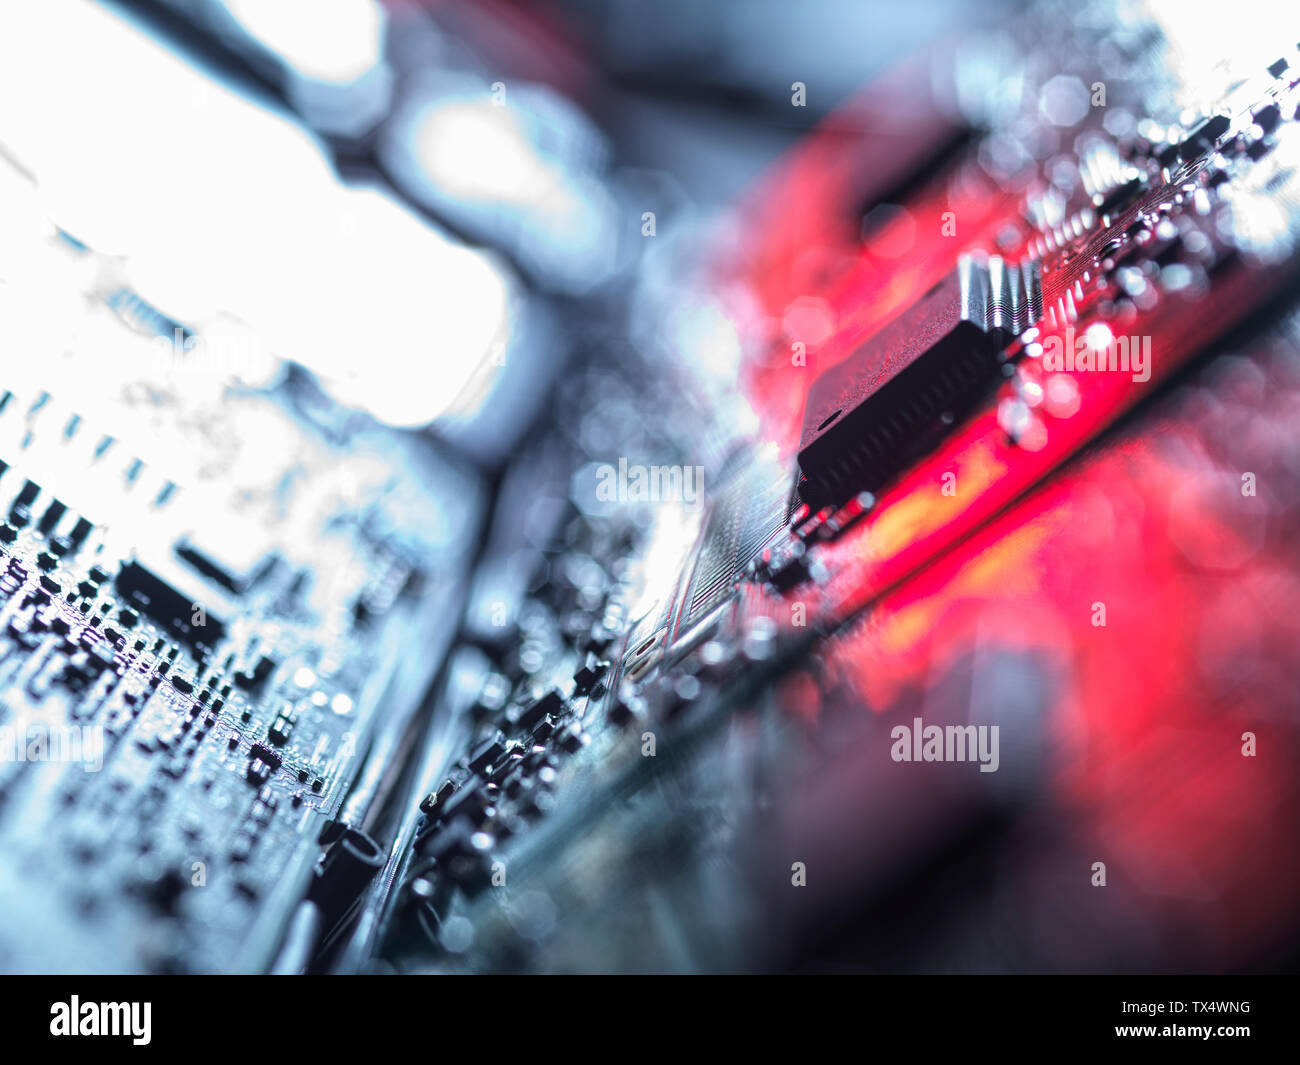 Detail of computer hardware electronics Stock Photo